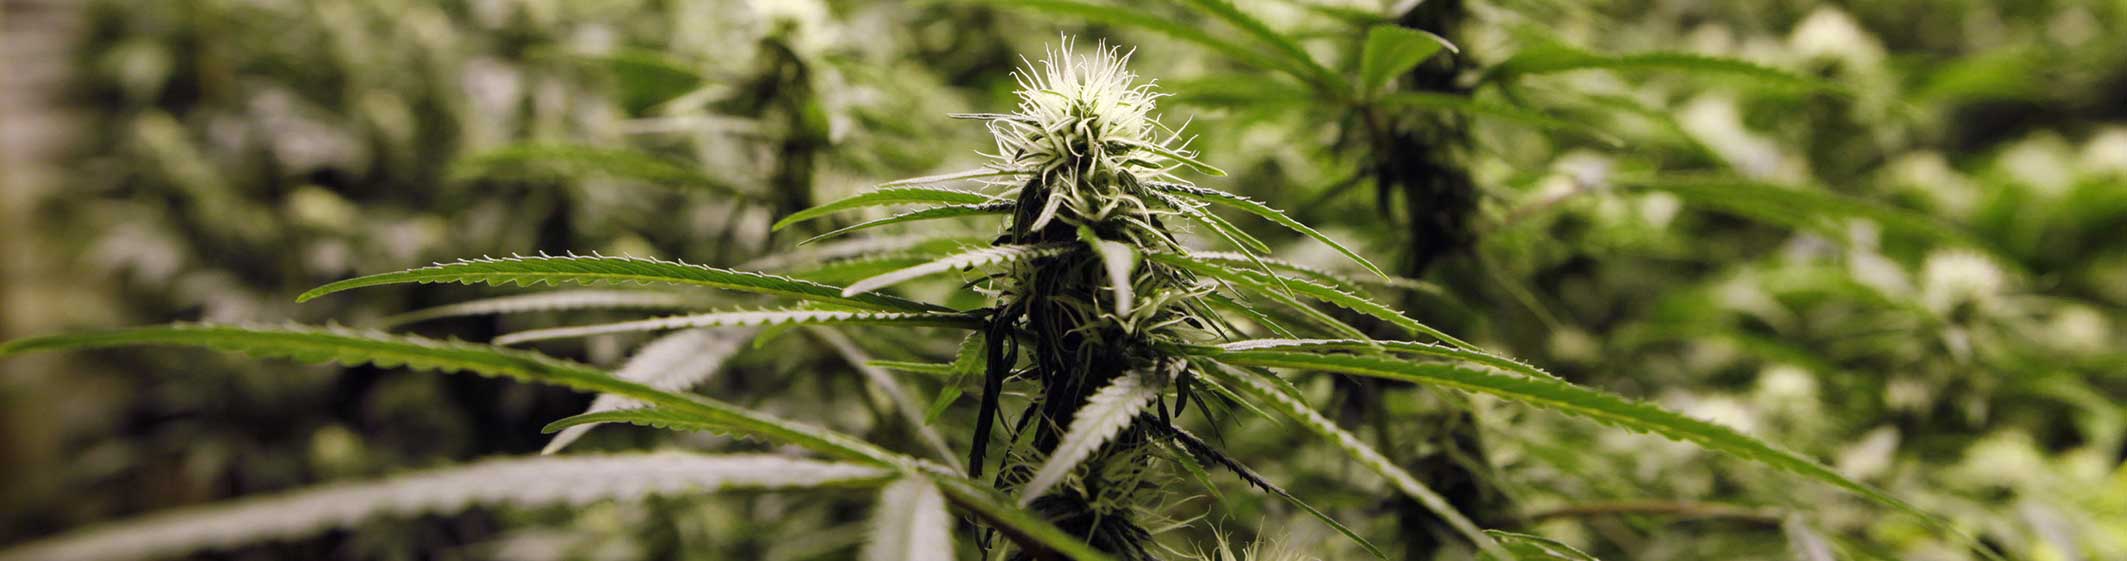 pianta di cannabis legale